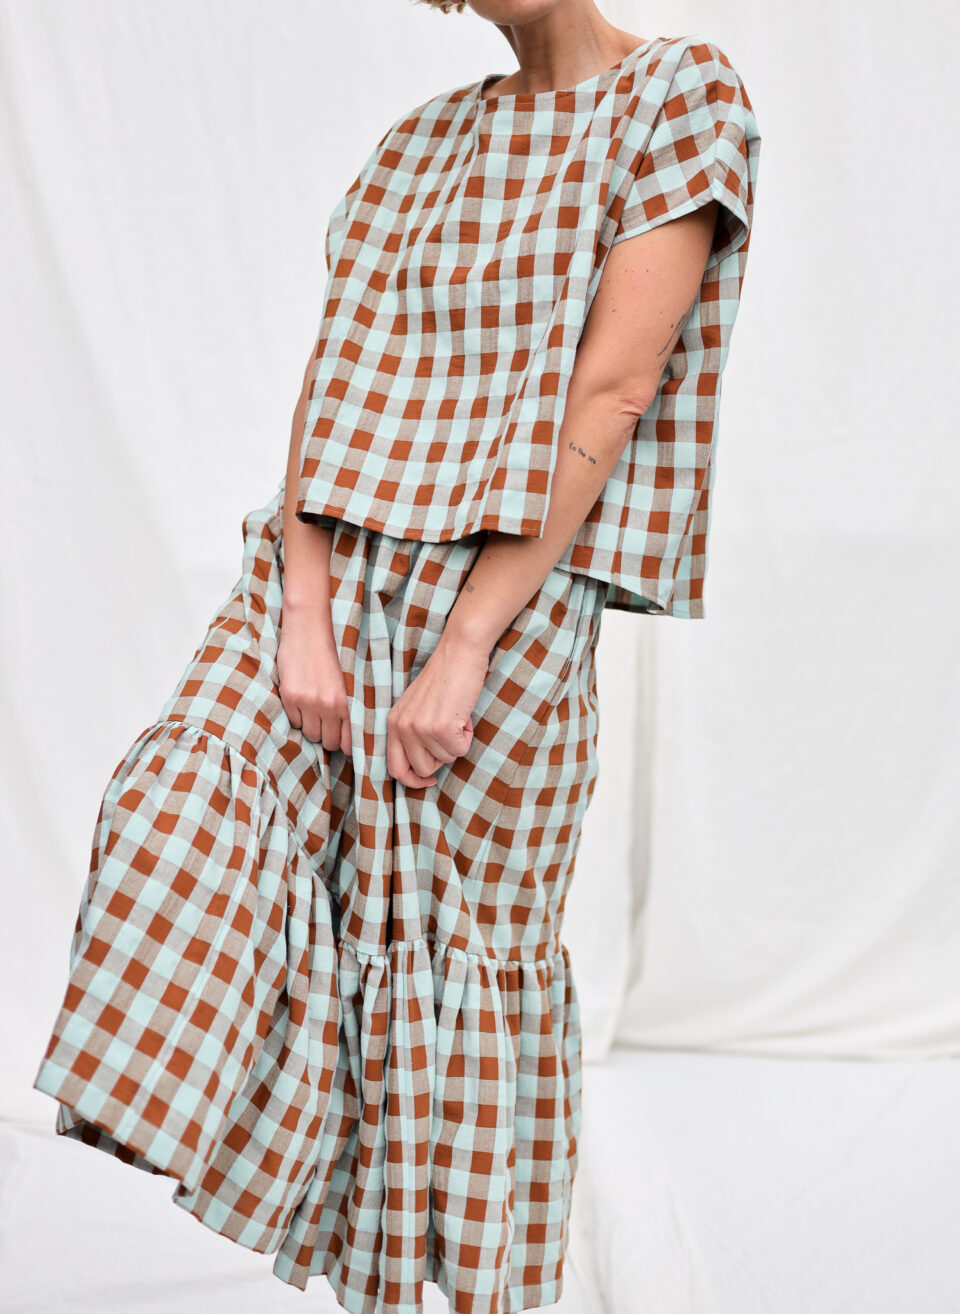 Seersucker checks elasticated waist ruffled skirt | Skirt | Sustainable clothing | OffOn clothing